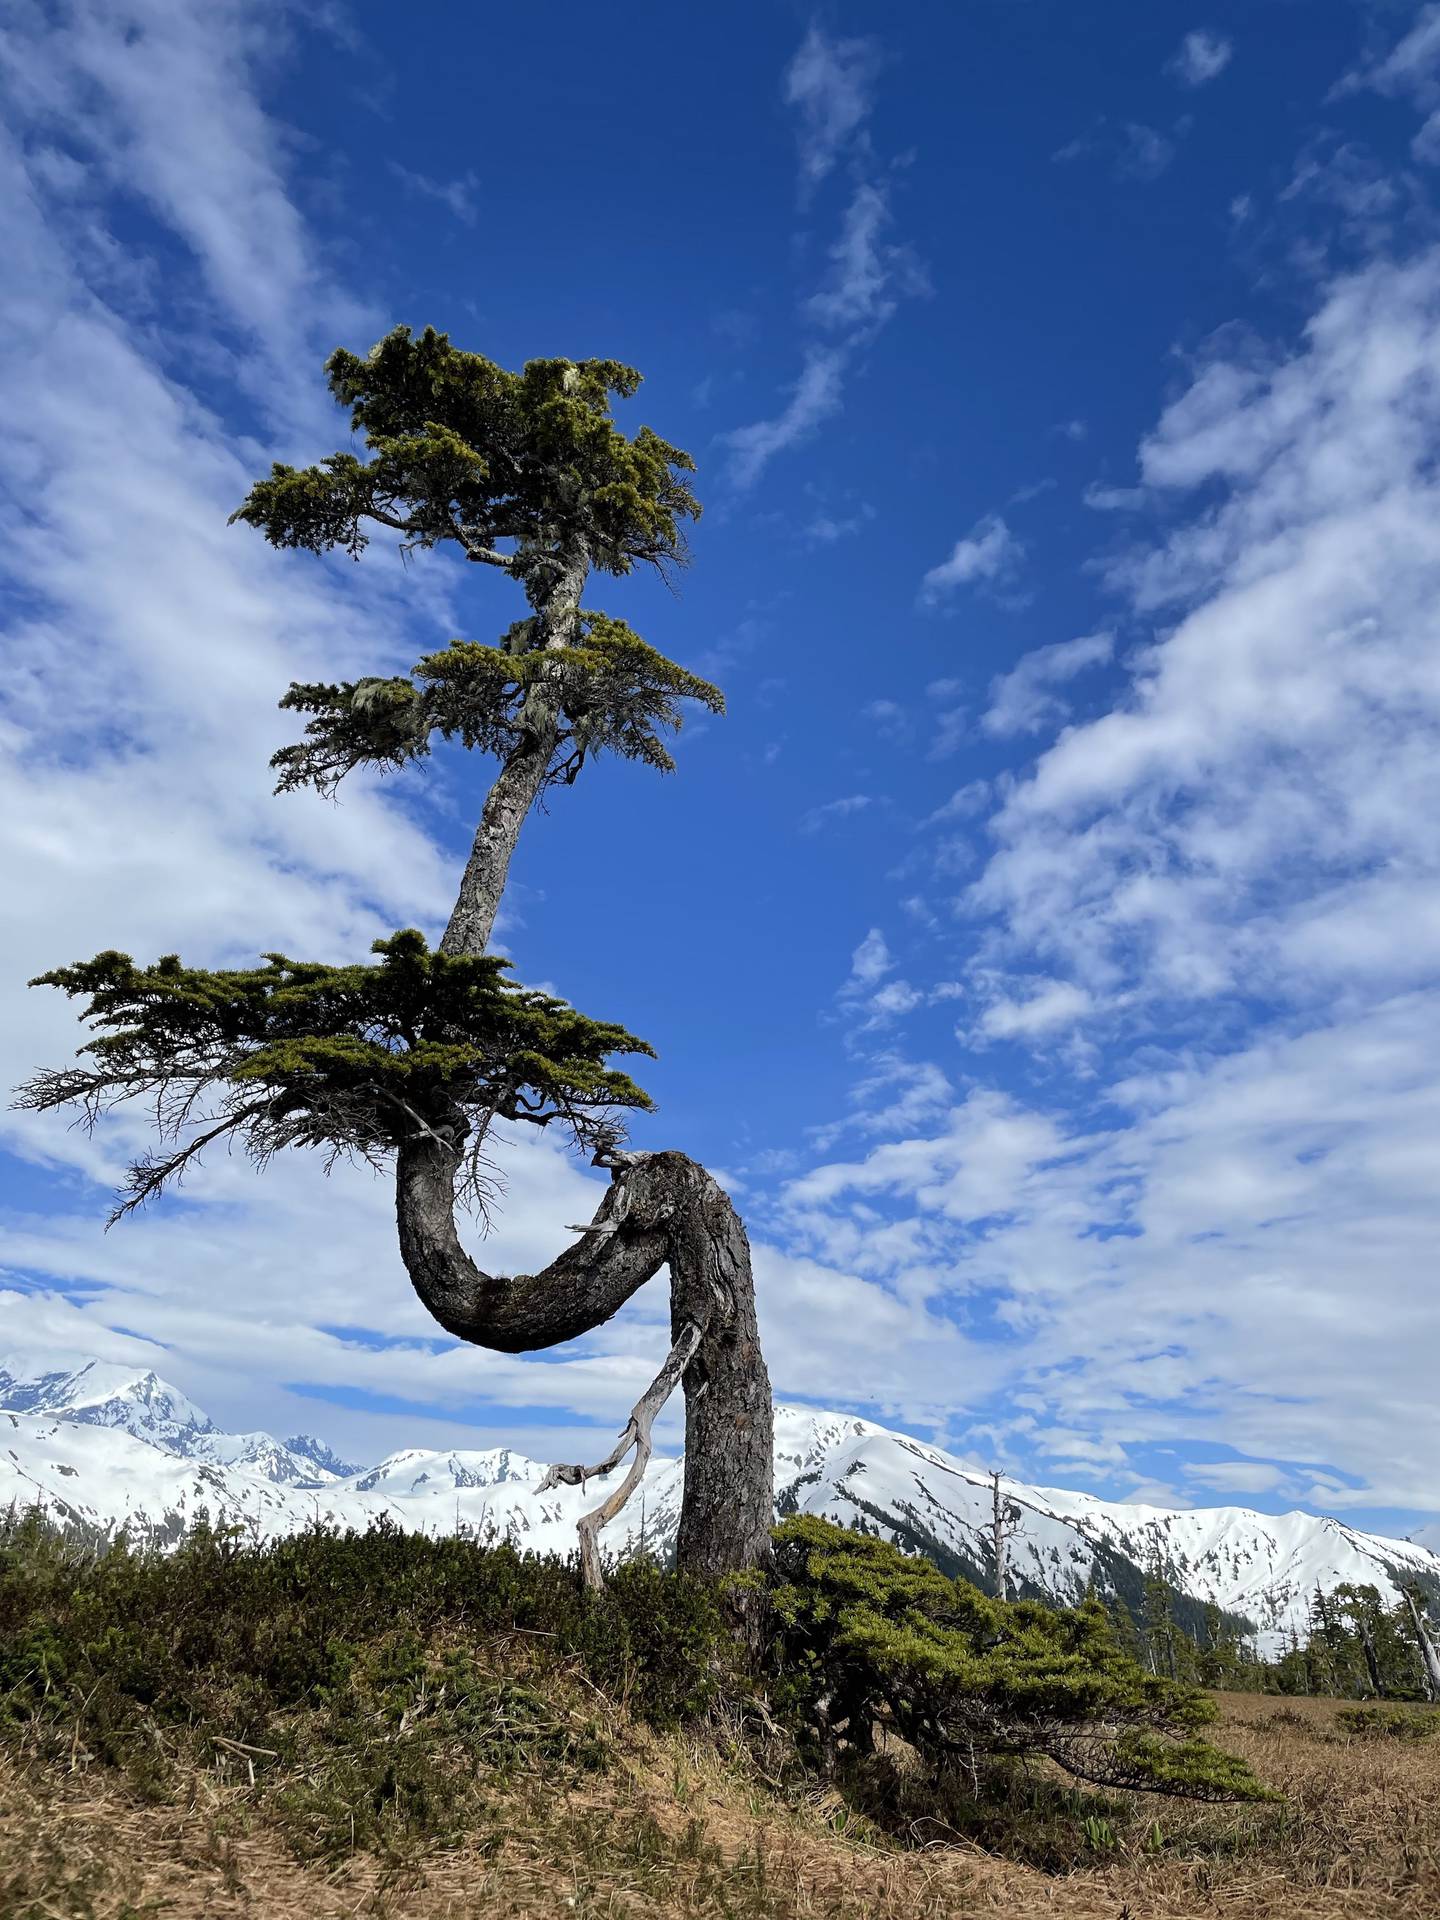 A mountain hemlock tree